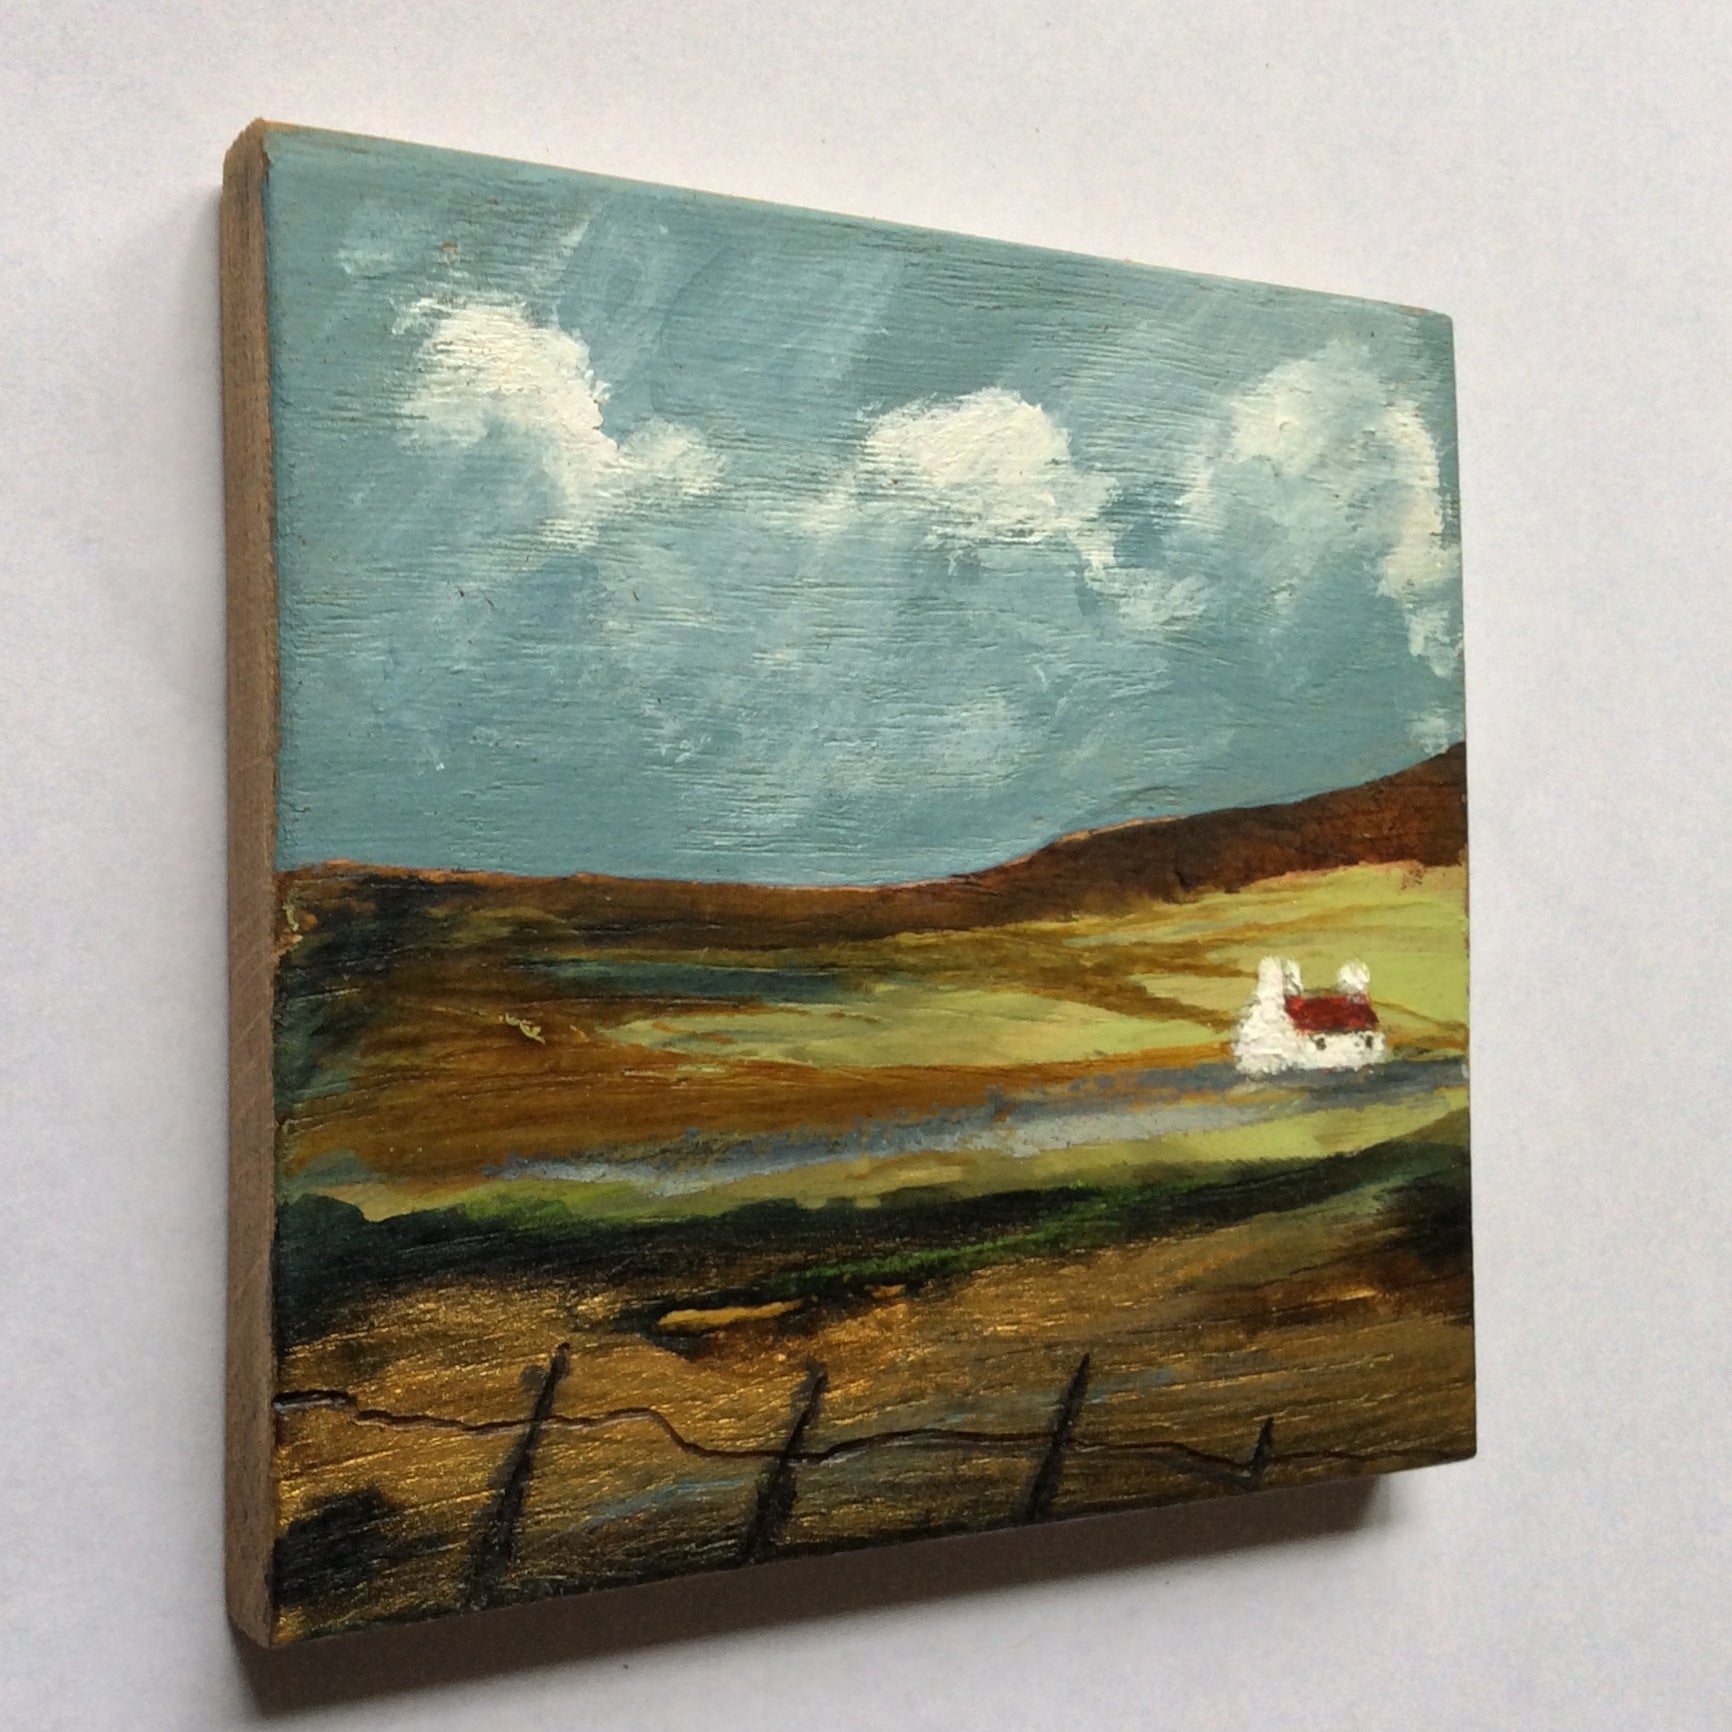 Mini Mixed Media Art on wood By Louise O'Hara - "Sunlight Across the plains”